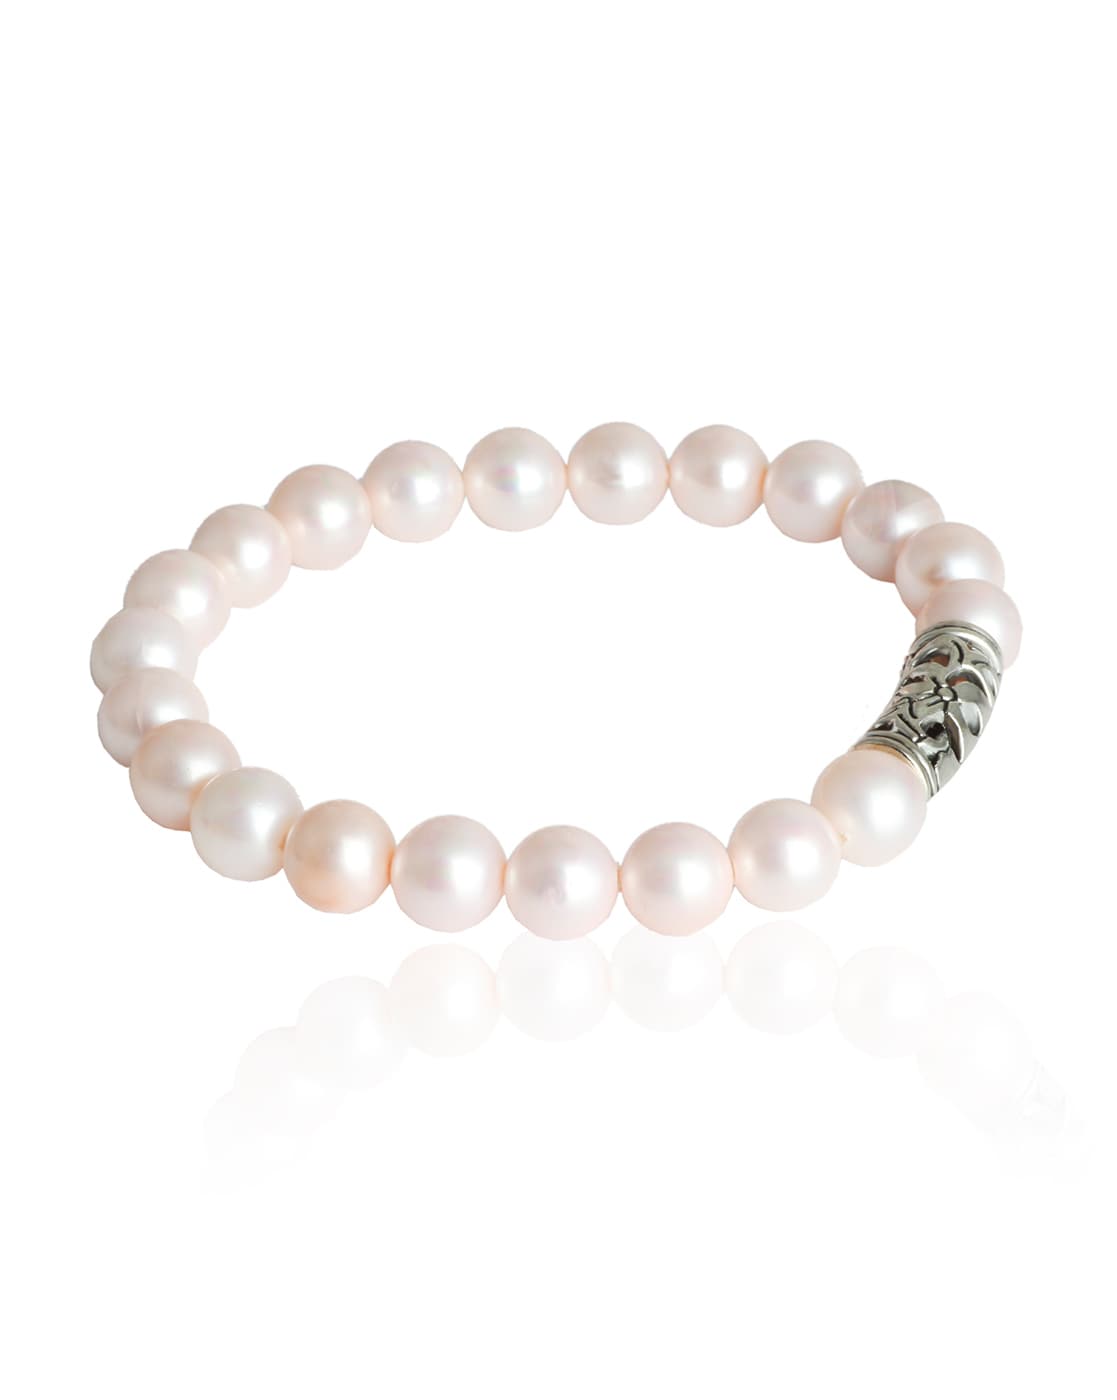 Buy White Handcrafted Pearl Beaded Bracelet | KJ-KM048/KAJL1 | The loom